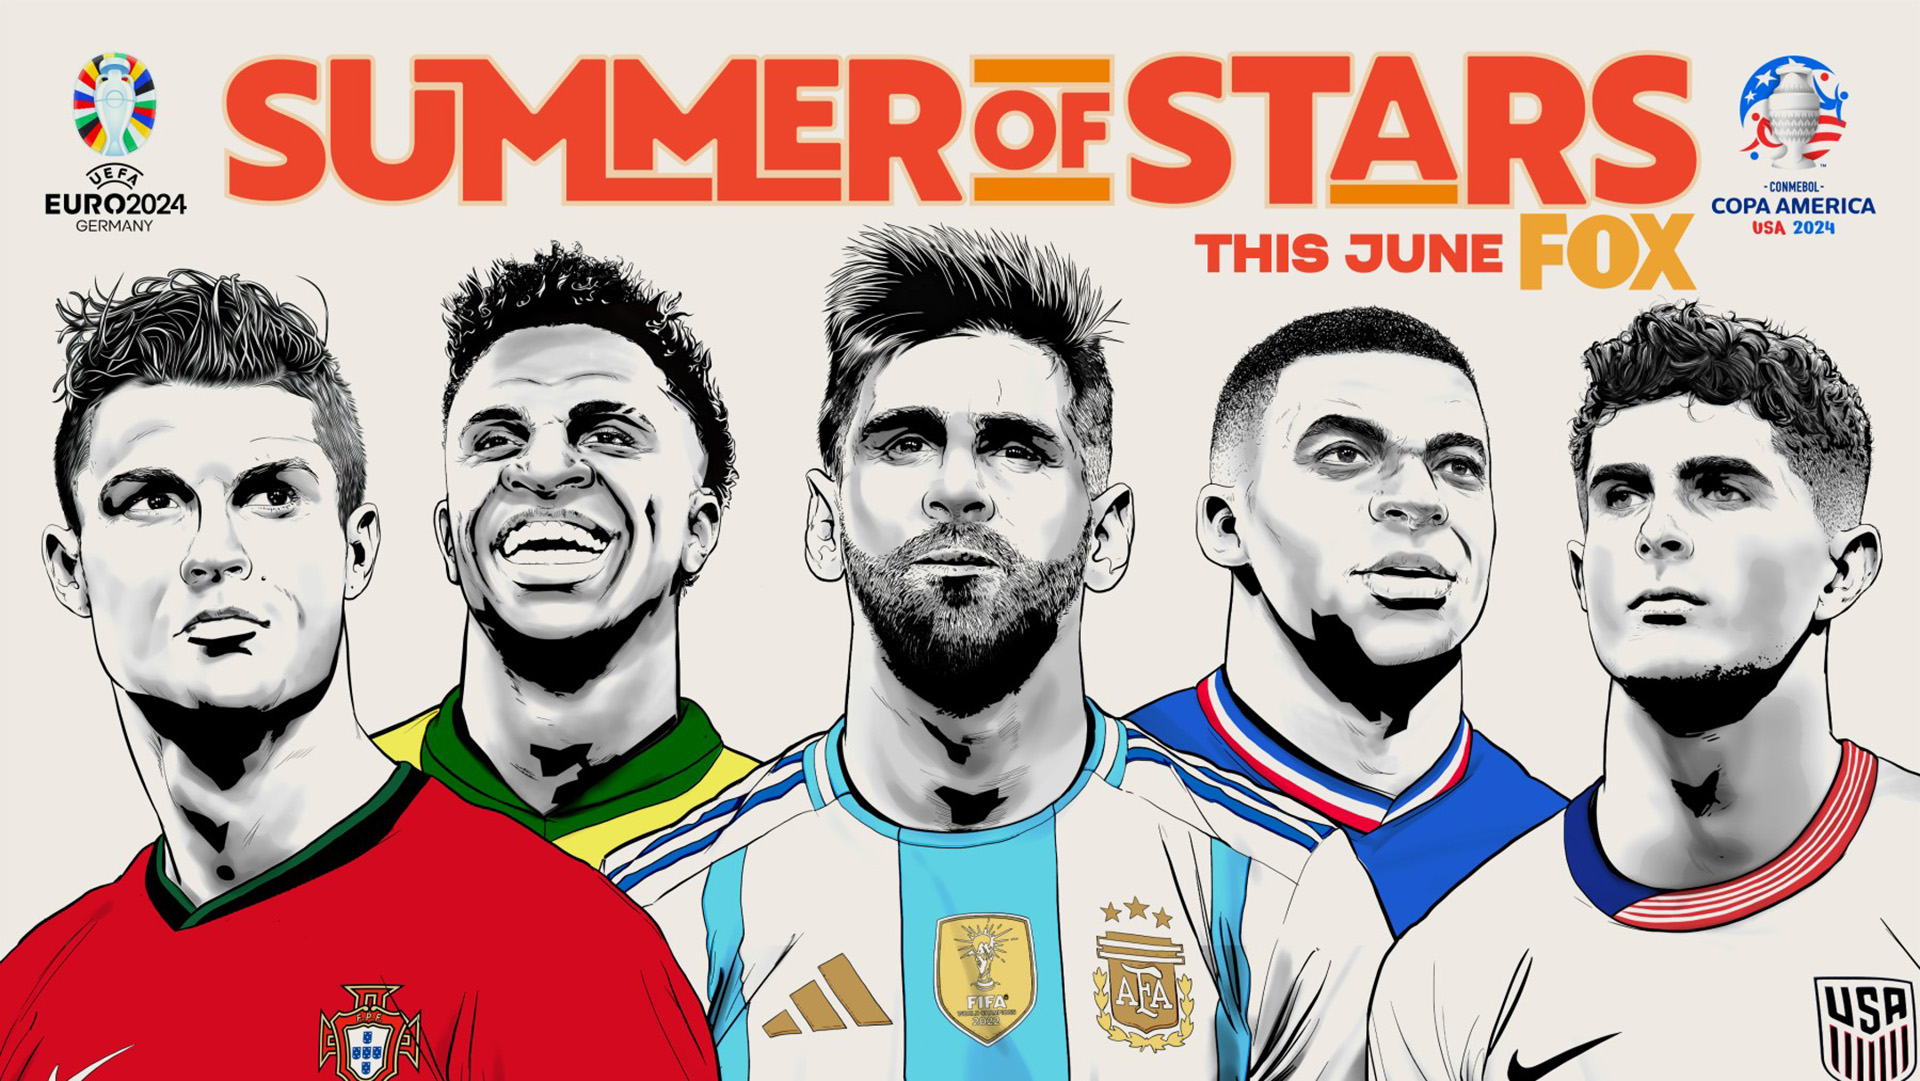 FOX Sports on SiriusXM - Summer of Stars - Copa América and EURO 2024